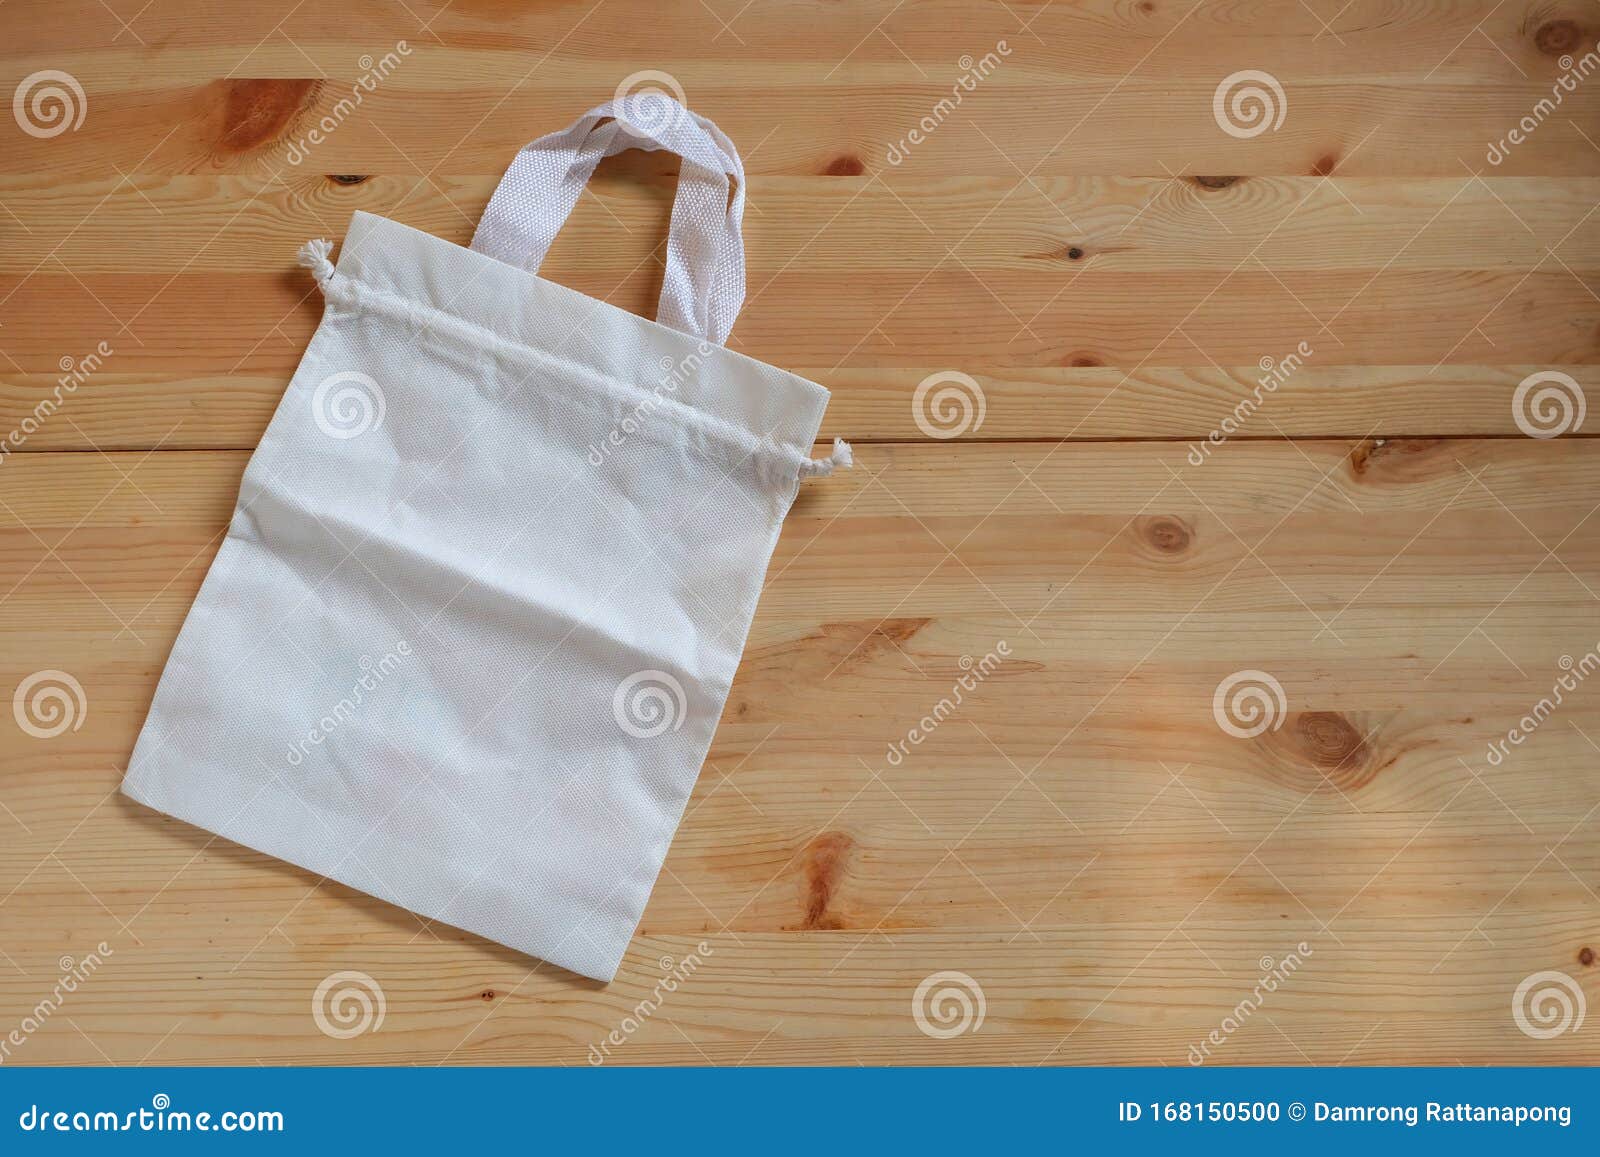 Premium Vector  Zero waste rules disposable package vs reusable cotton bag